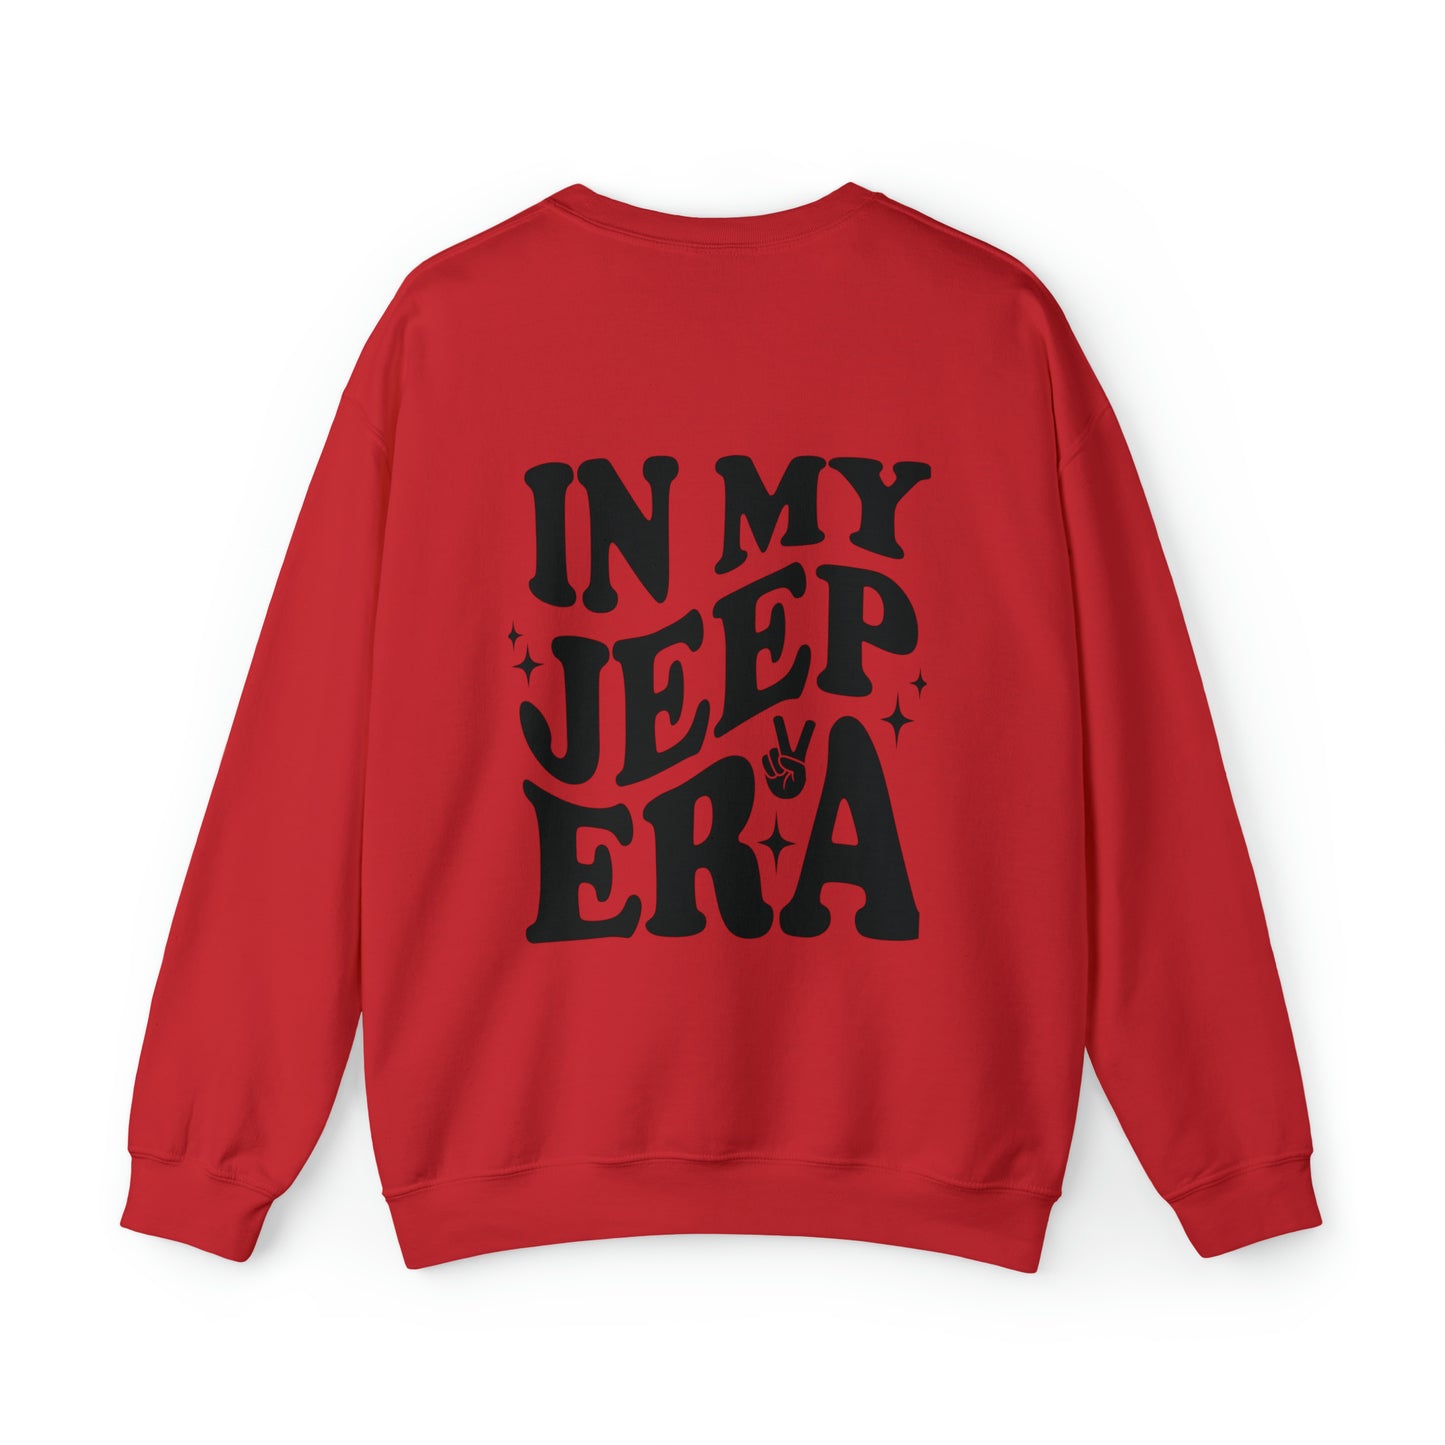 In My Jeep Era | Crewneck Sweatshirt